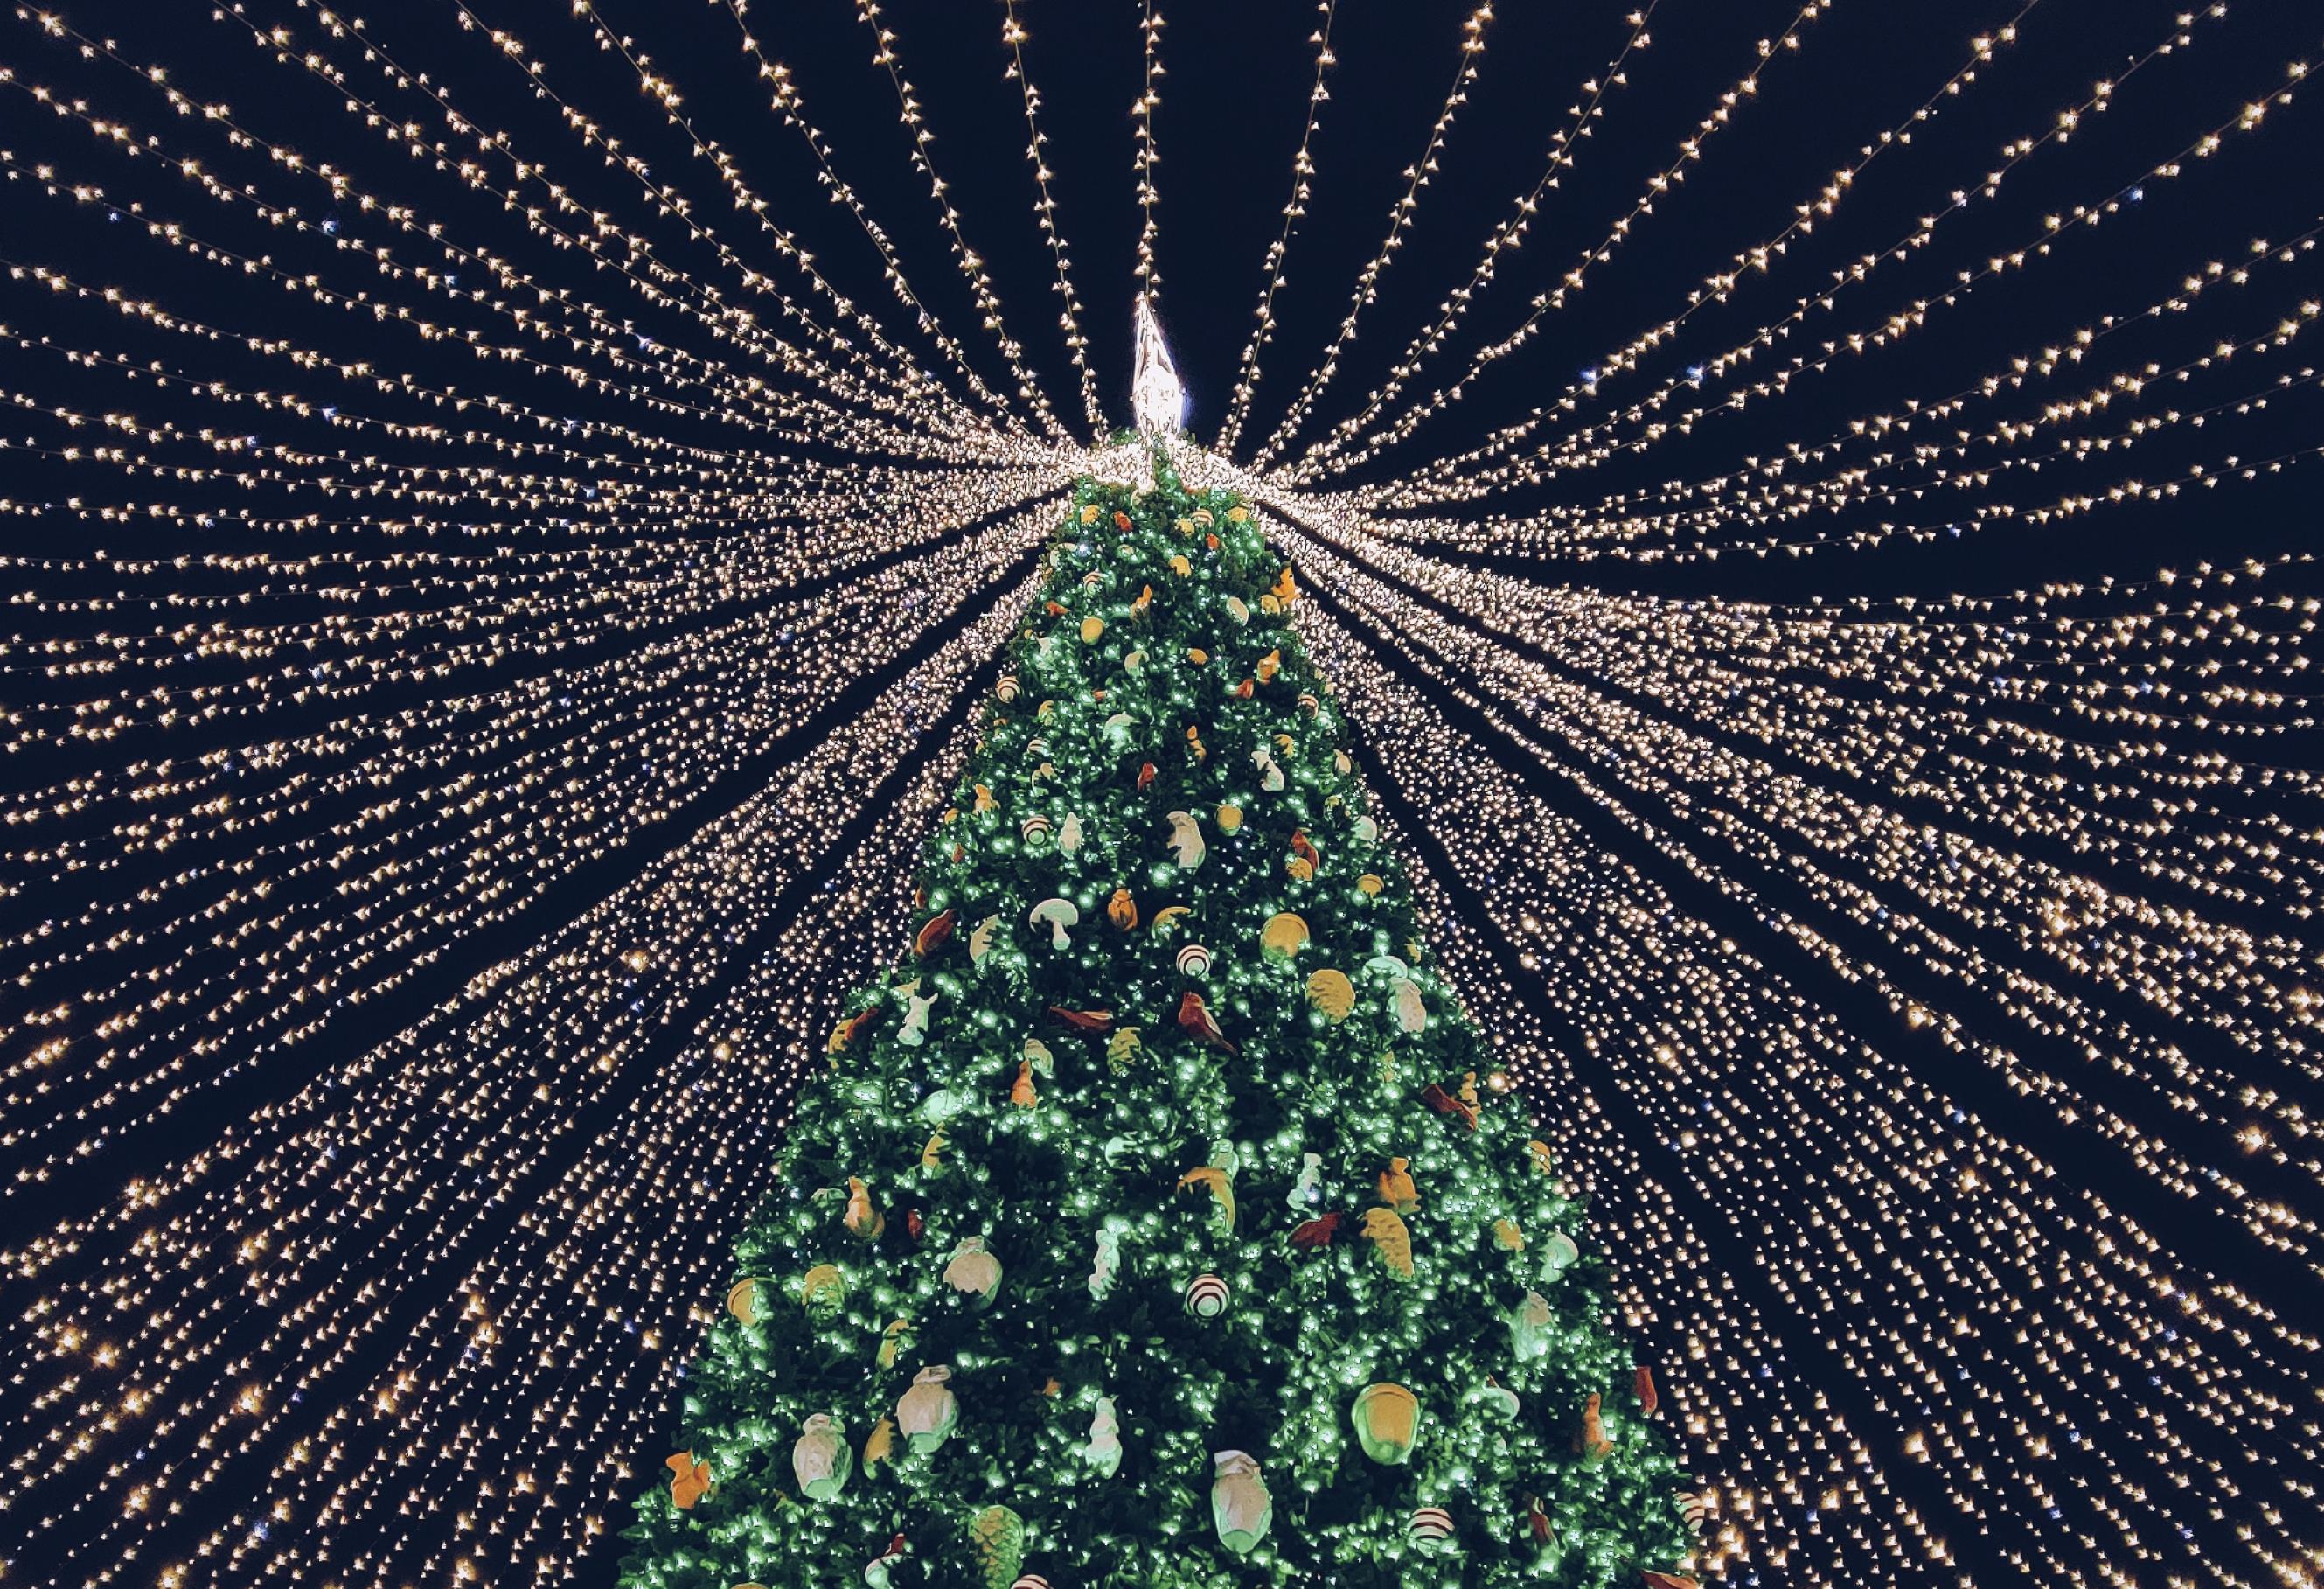 Tree Lighting & Santa's Arrival